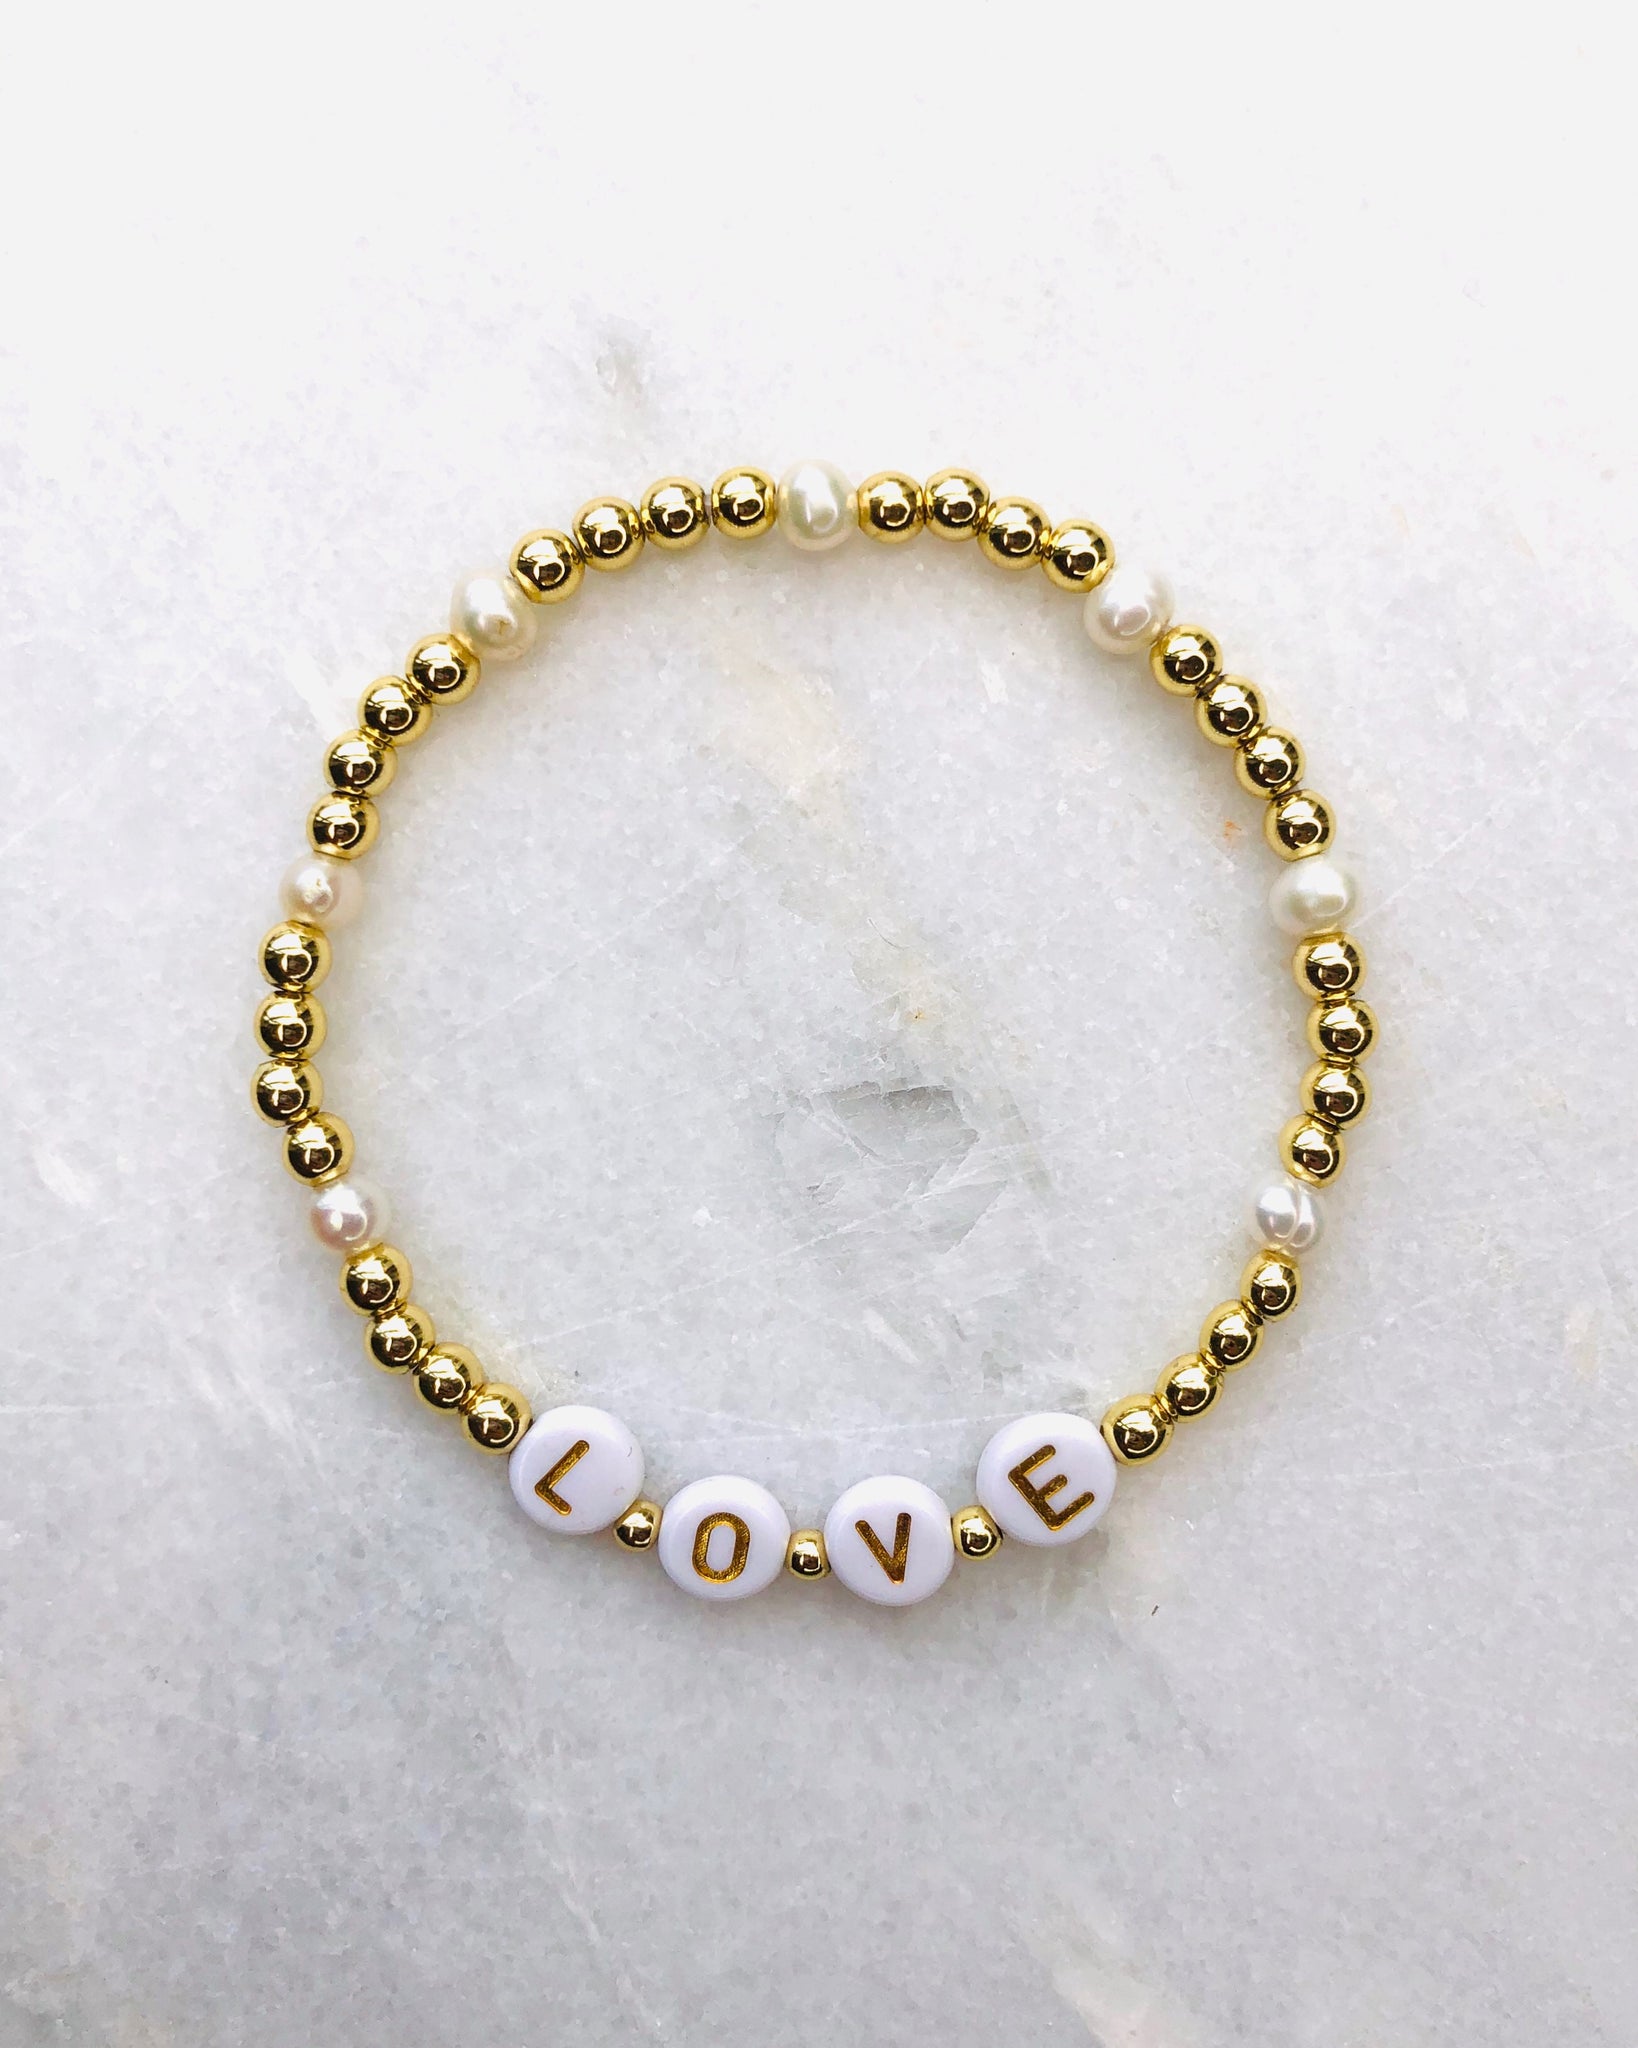 Sale! Love letter bracelet